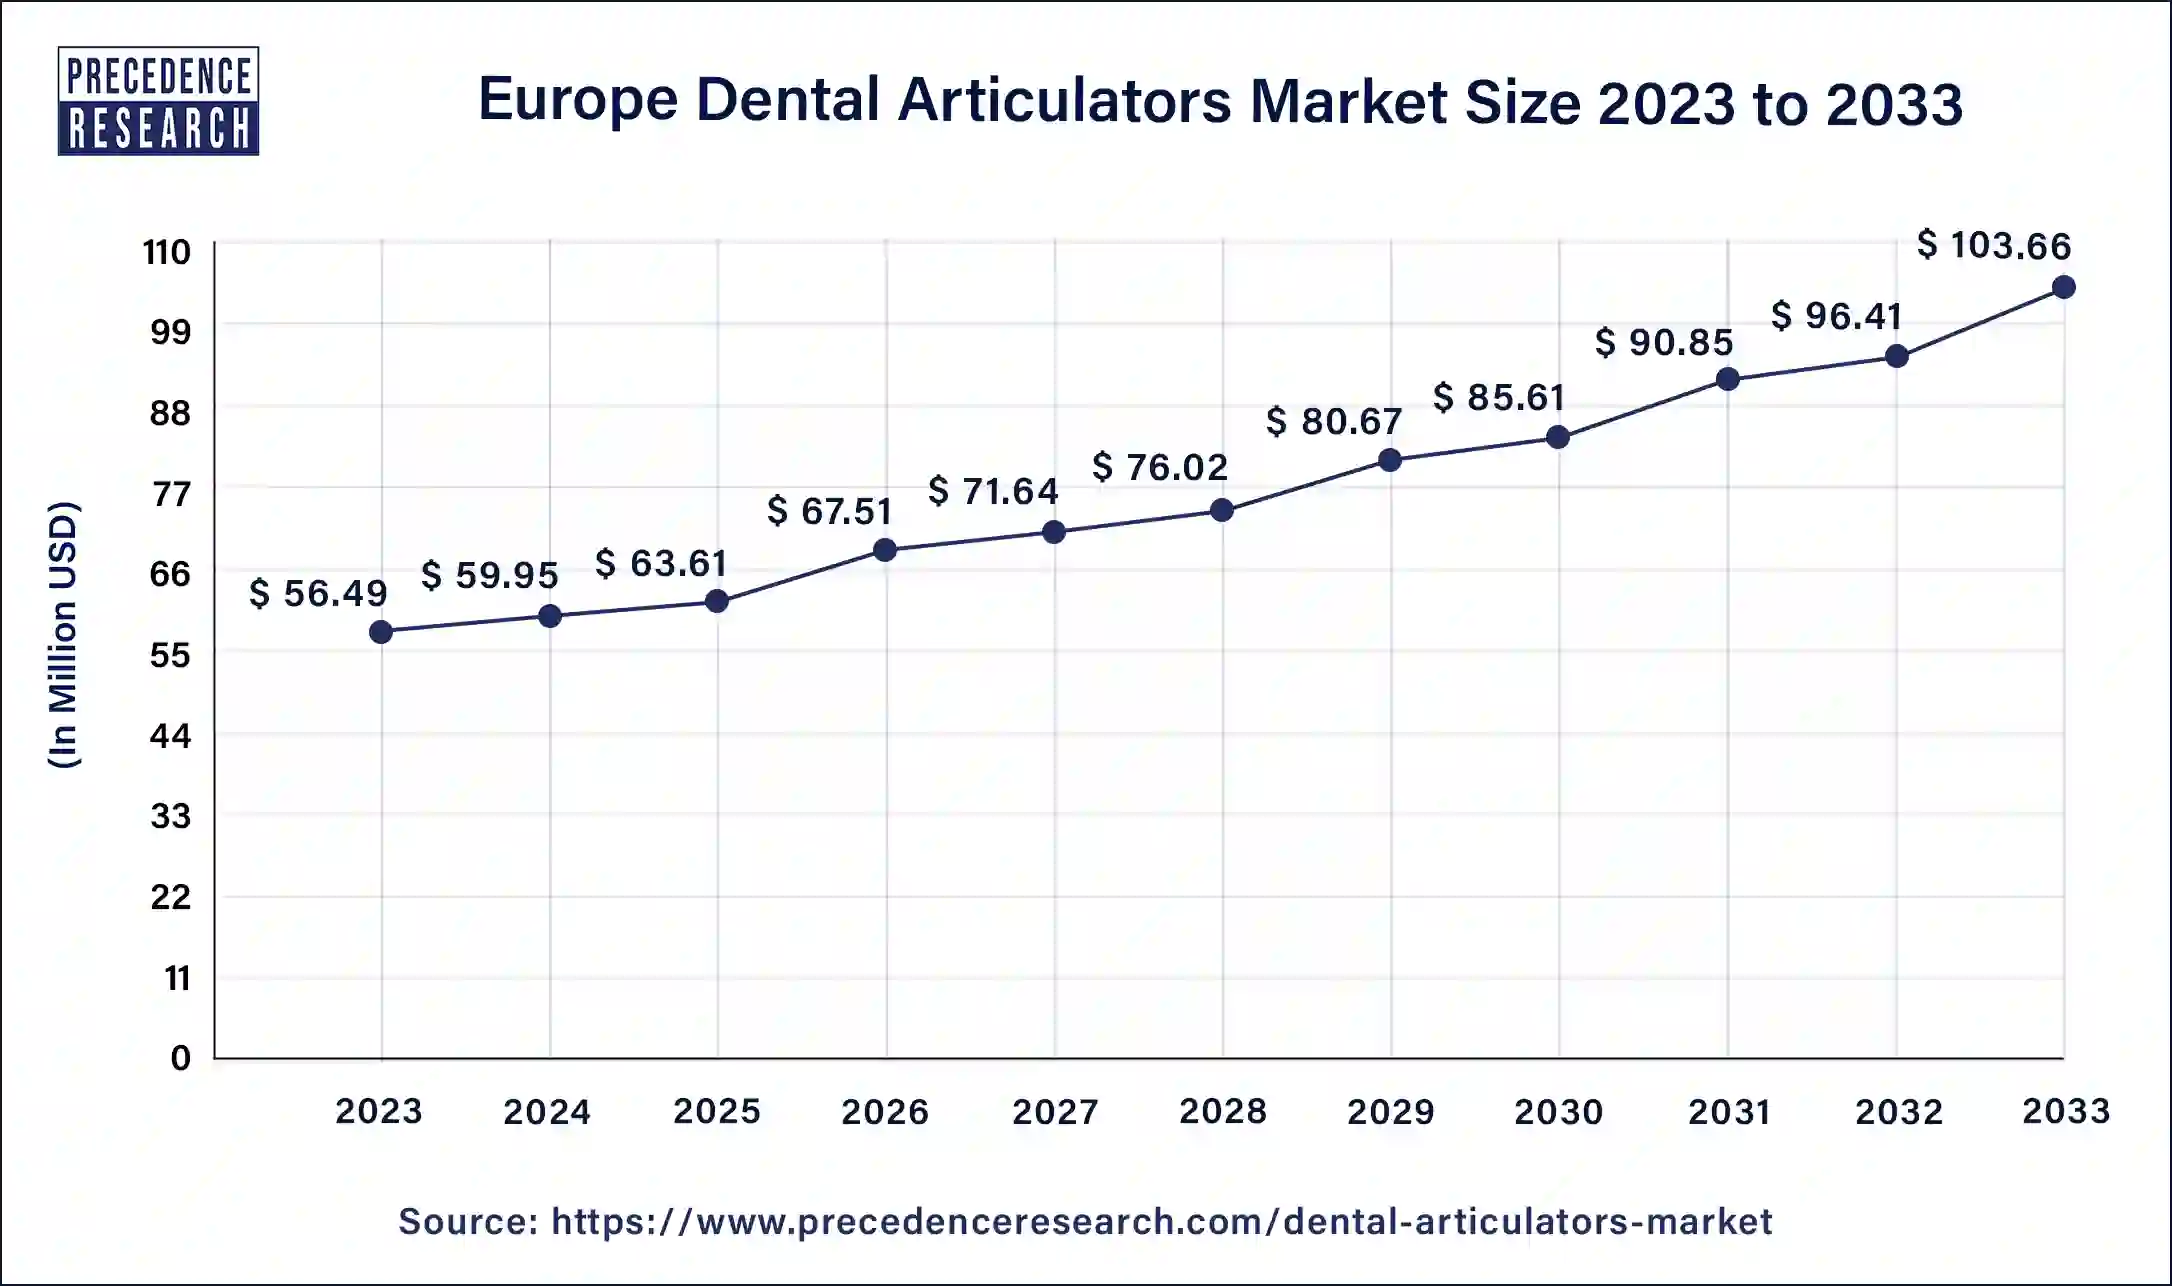 Europe Dental Articulators Market Size 2024 to 2033